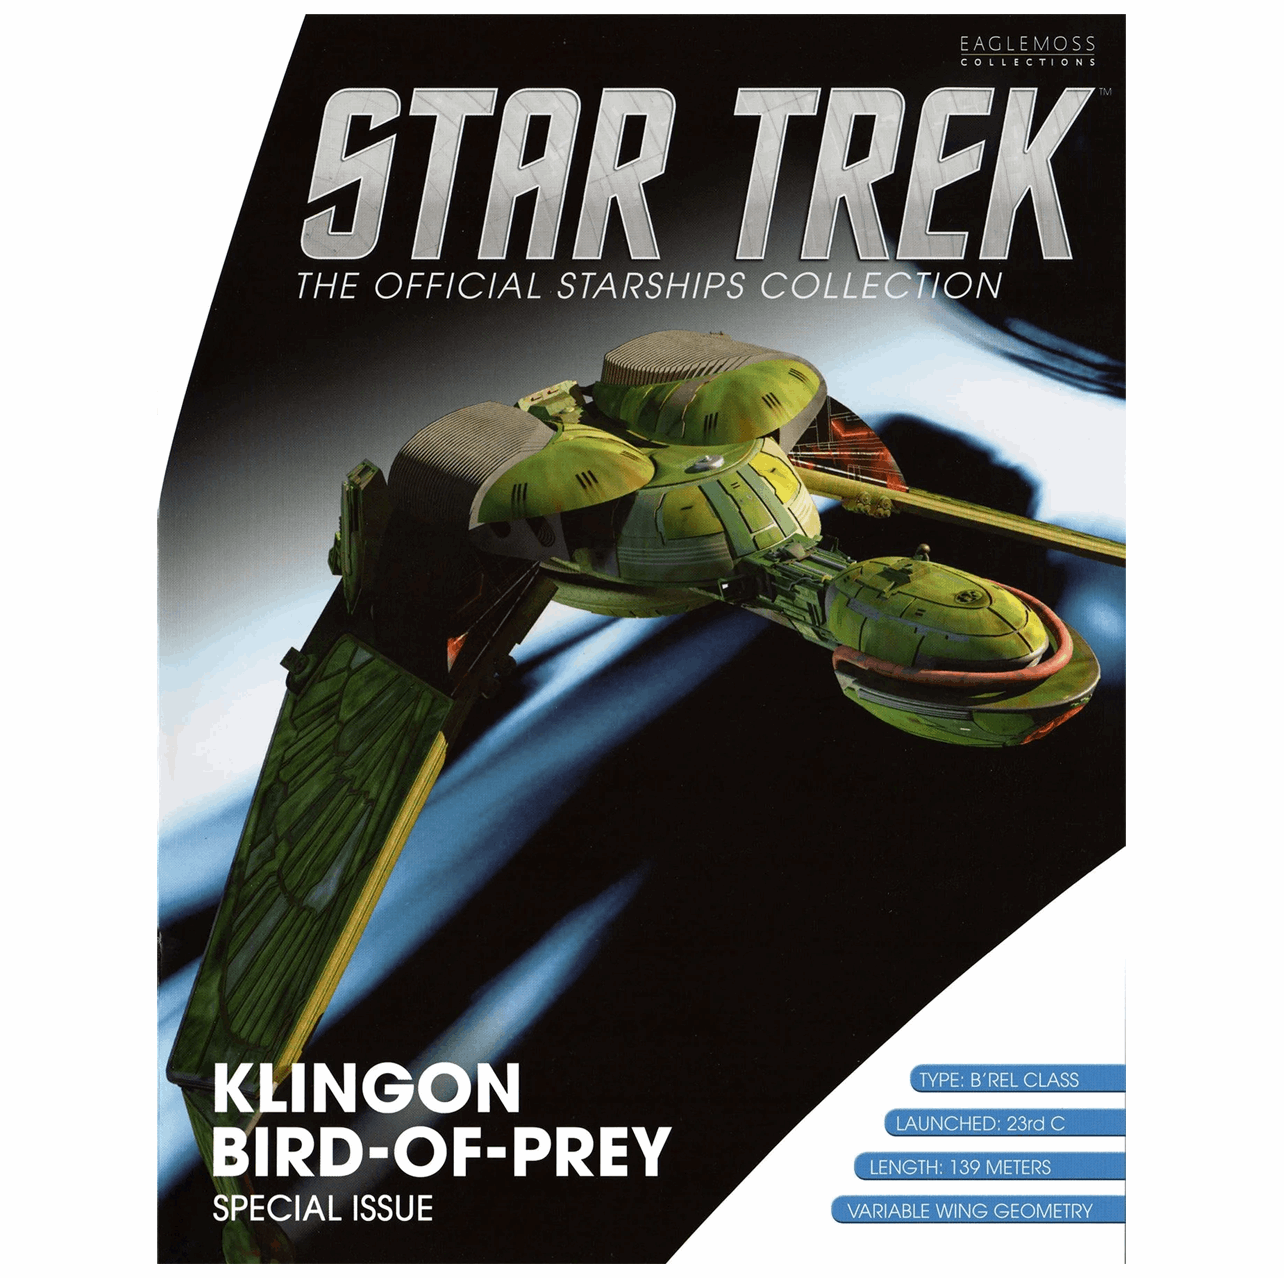 #13 Klingon Bird-of-Prey (B'rel-class) XL EDITION Diecast Model Ship (Eaglemoss / Star Trek)